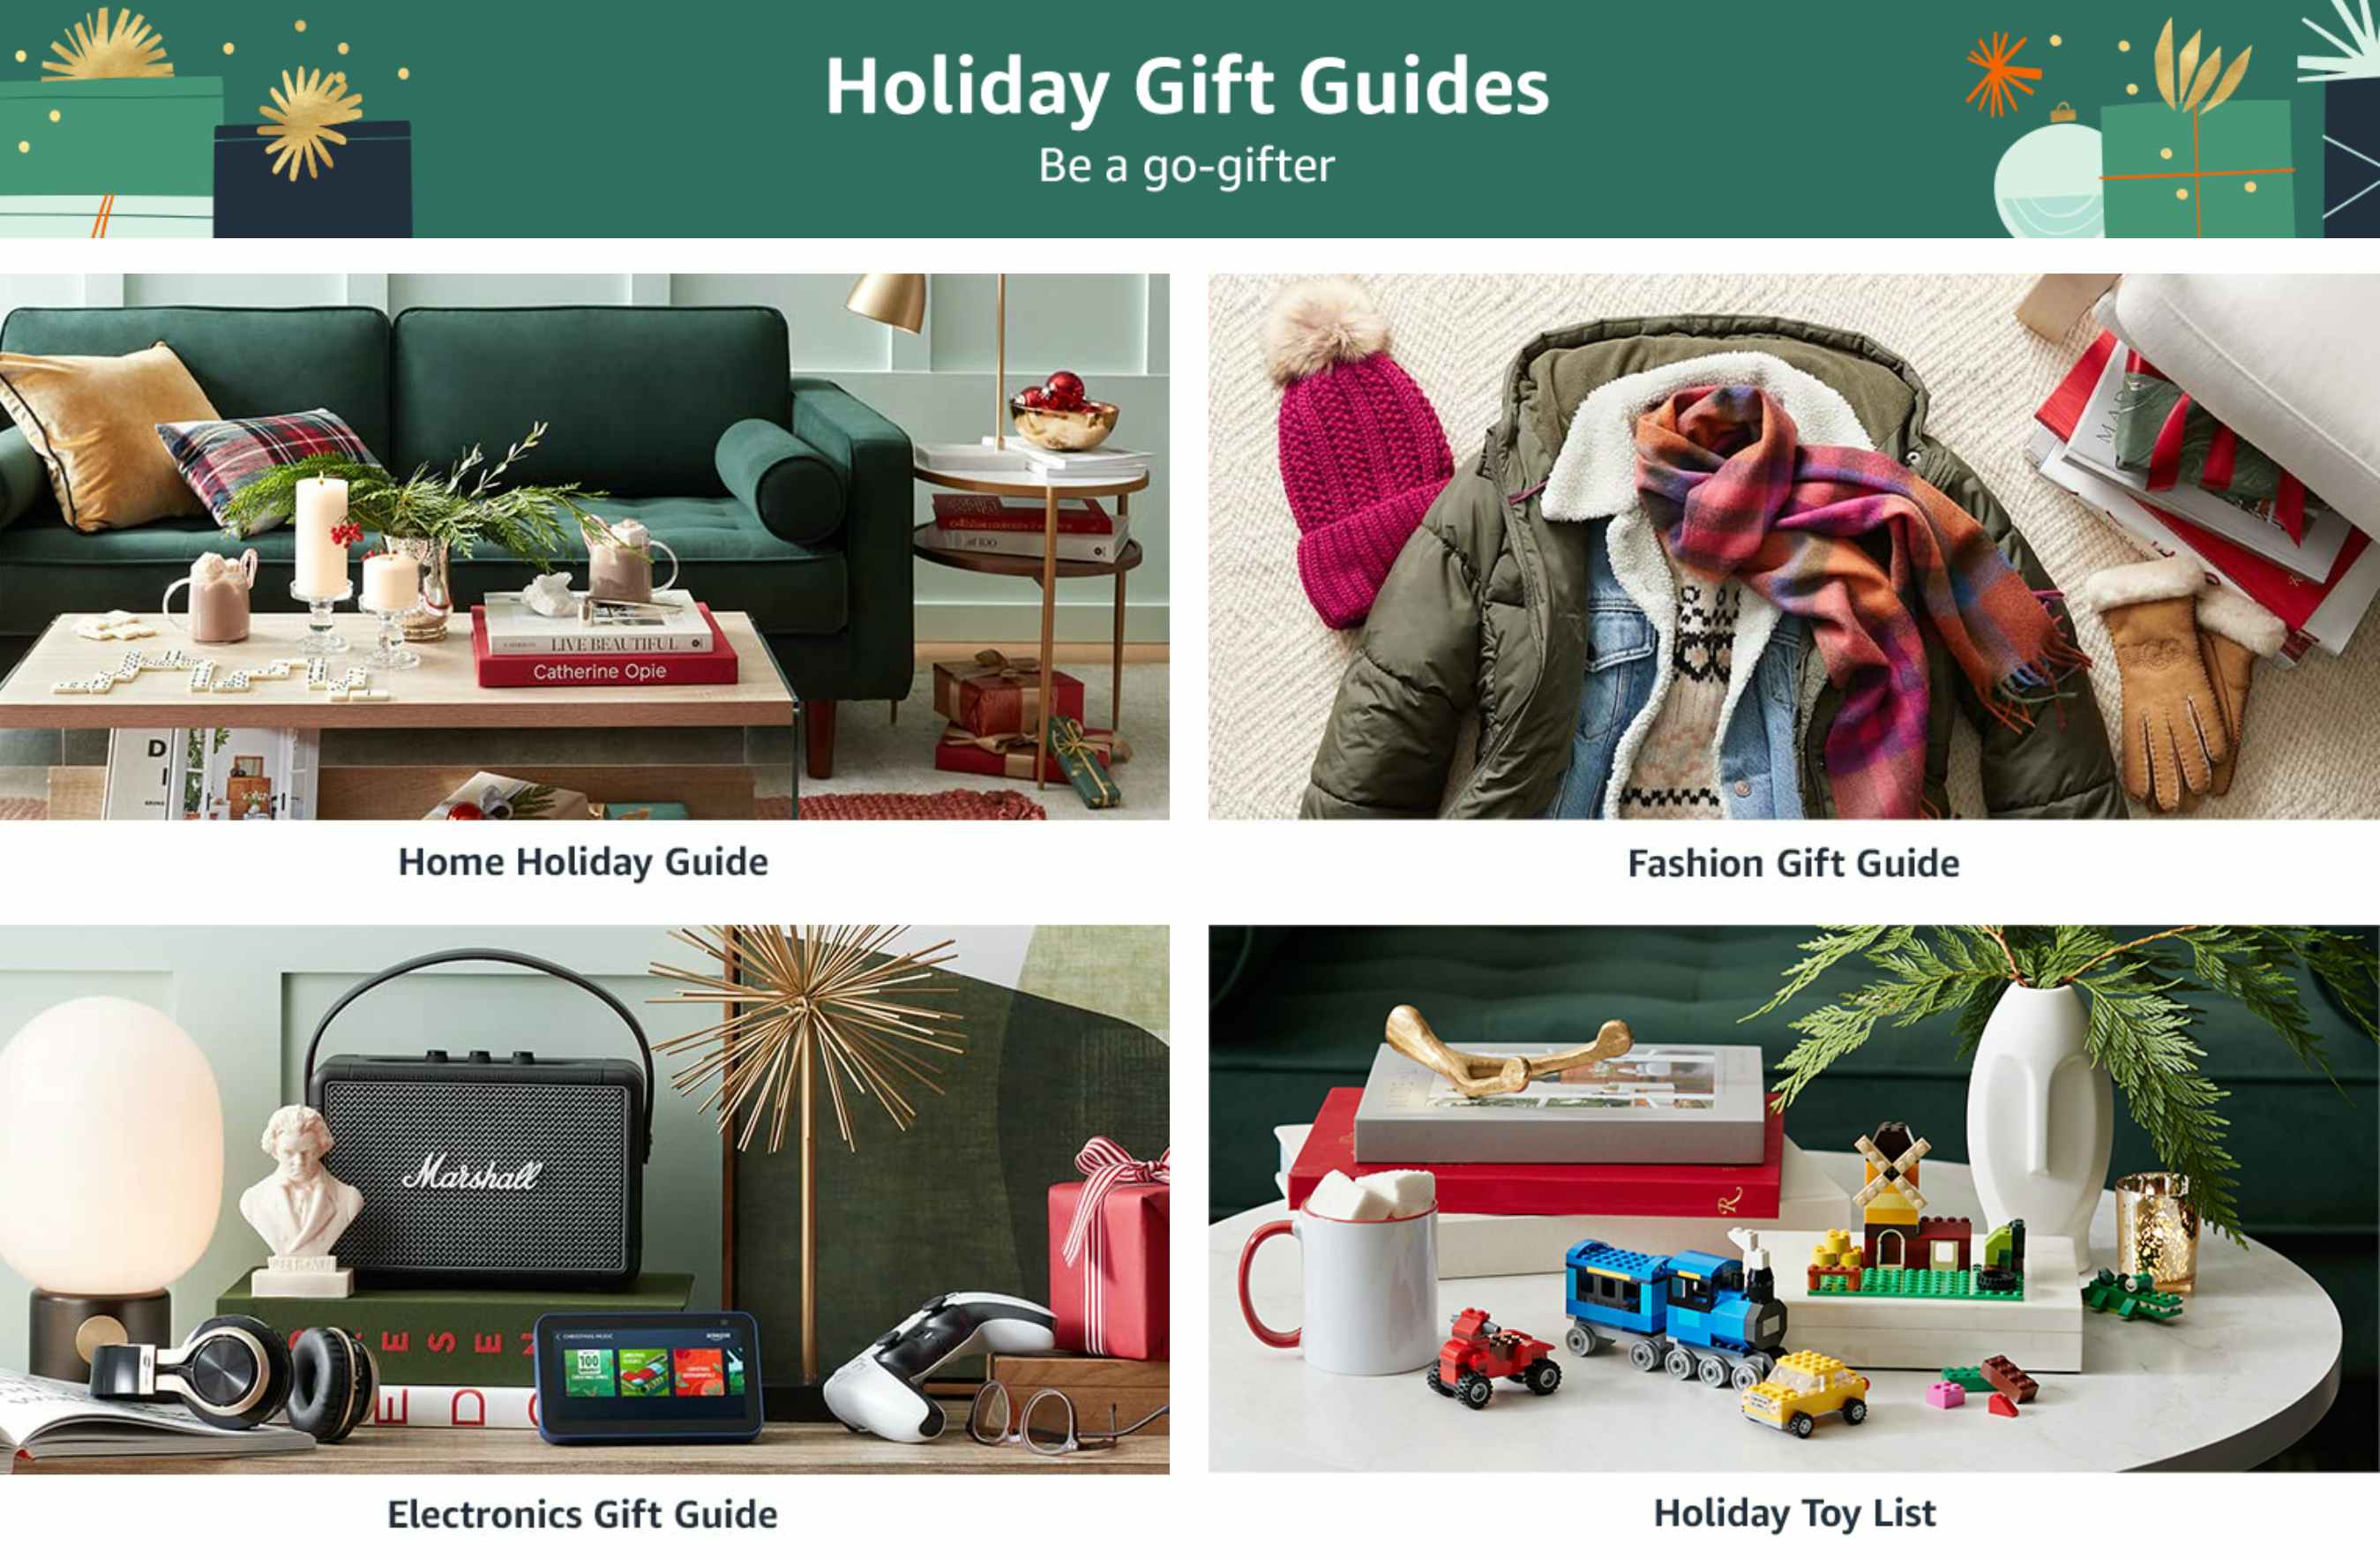 Amazon holiday gift guide webpage screenshot